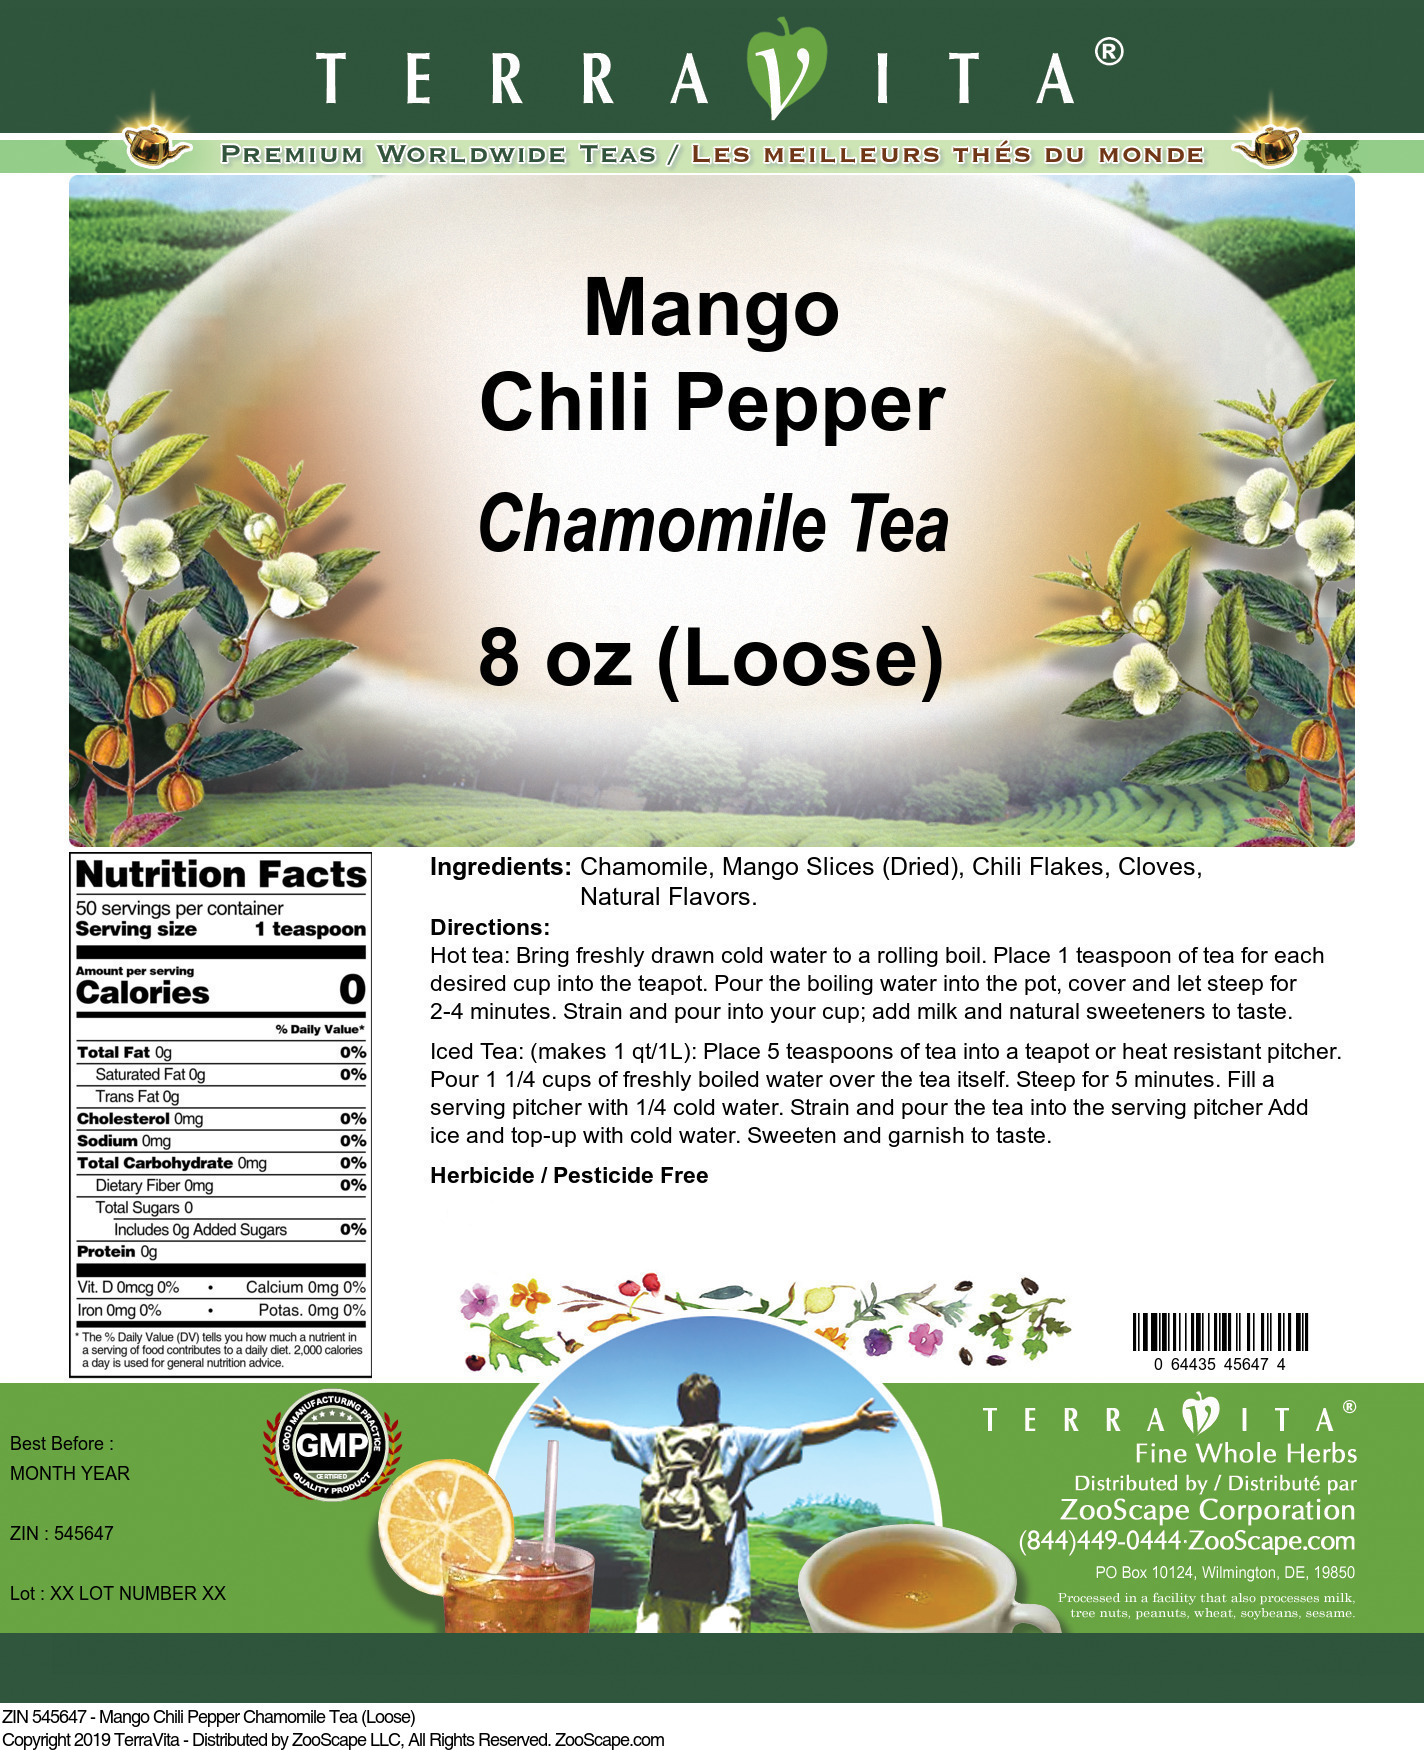 Mango Chili Pepper Chamomile Tea (Loose) - Label